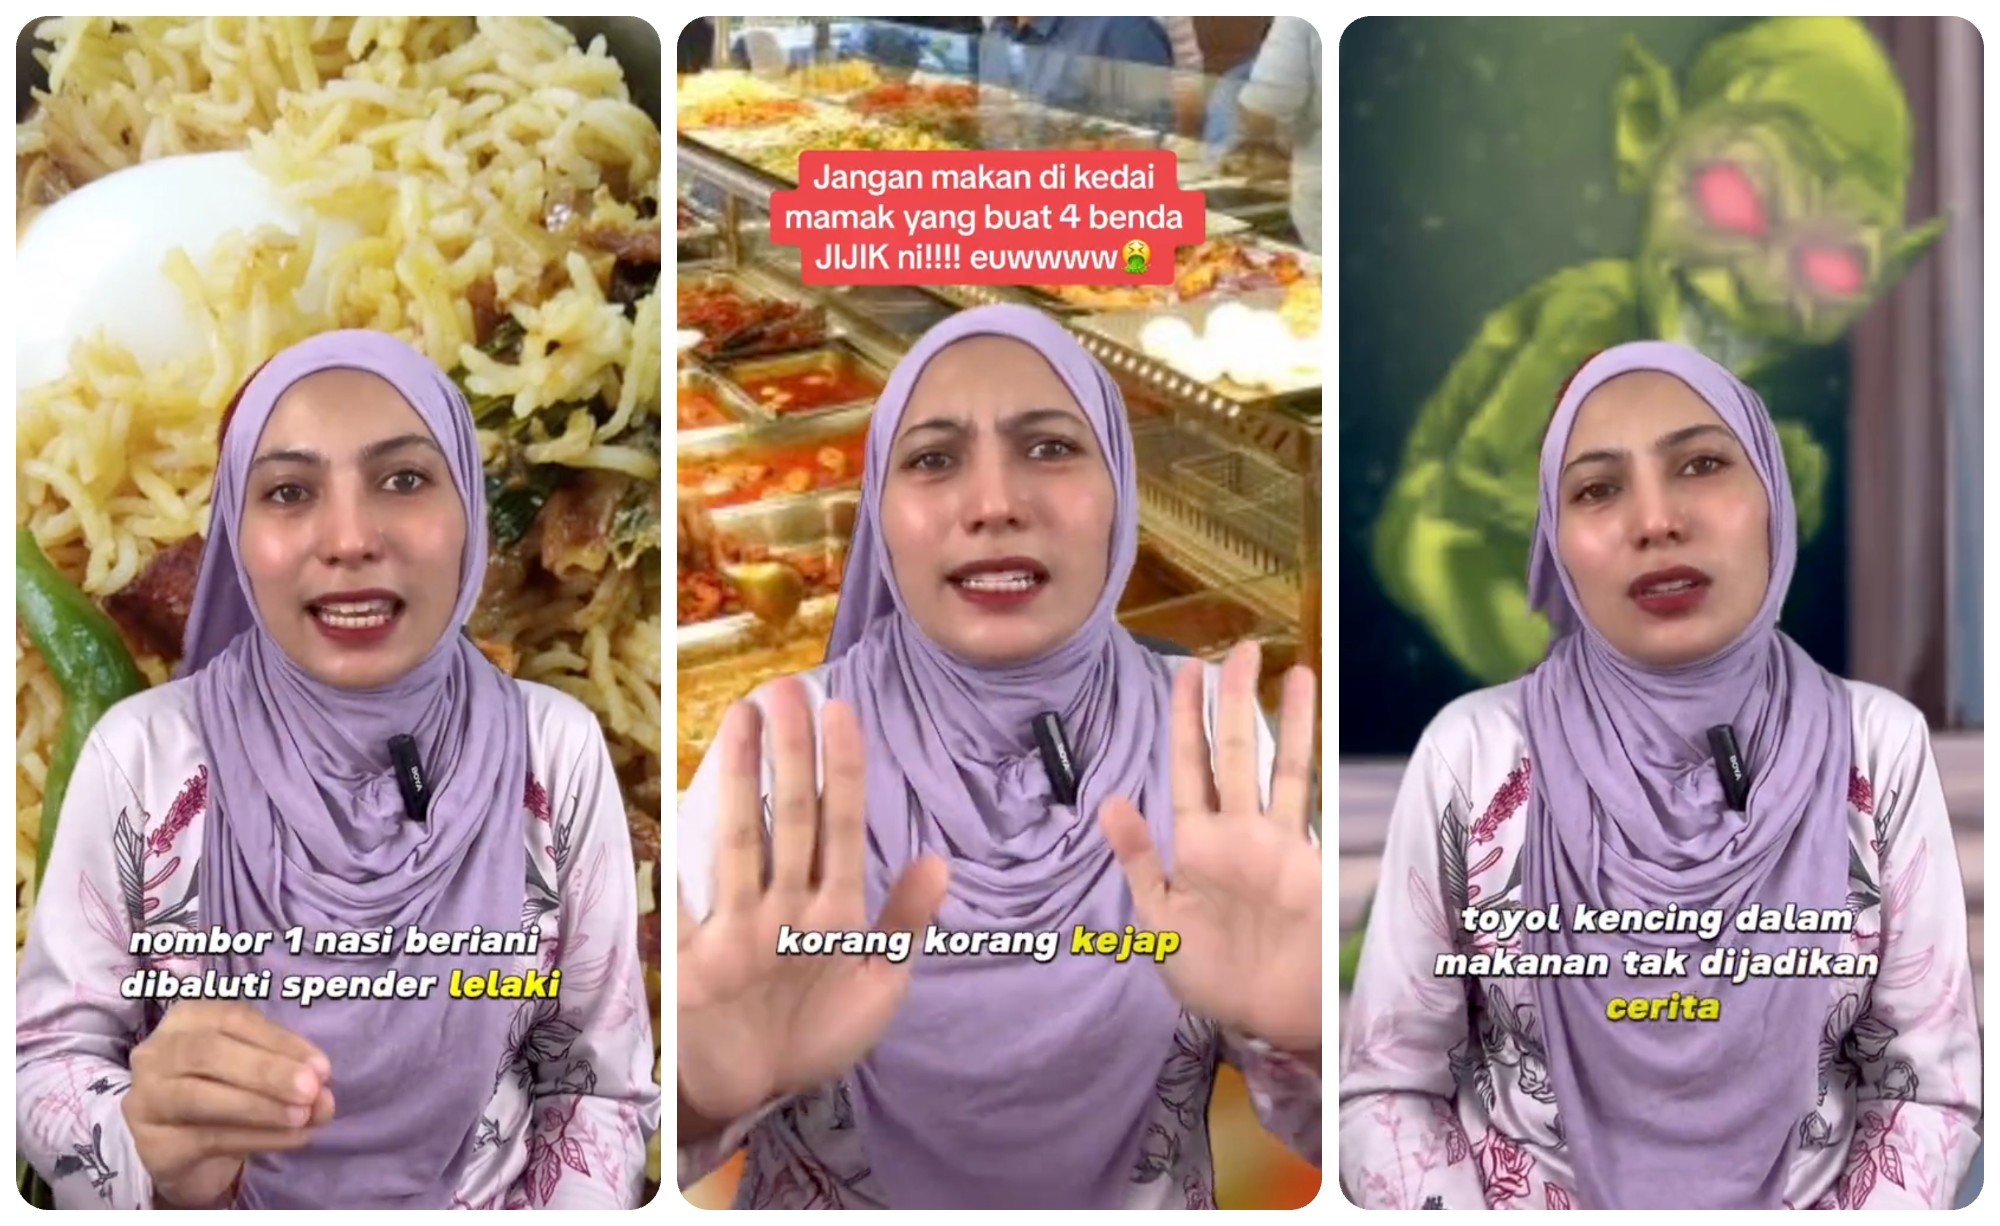 Presma slams TikTok user’s video of bizarre mamak restaurant claims, says industry tarnished